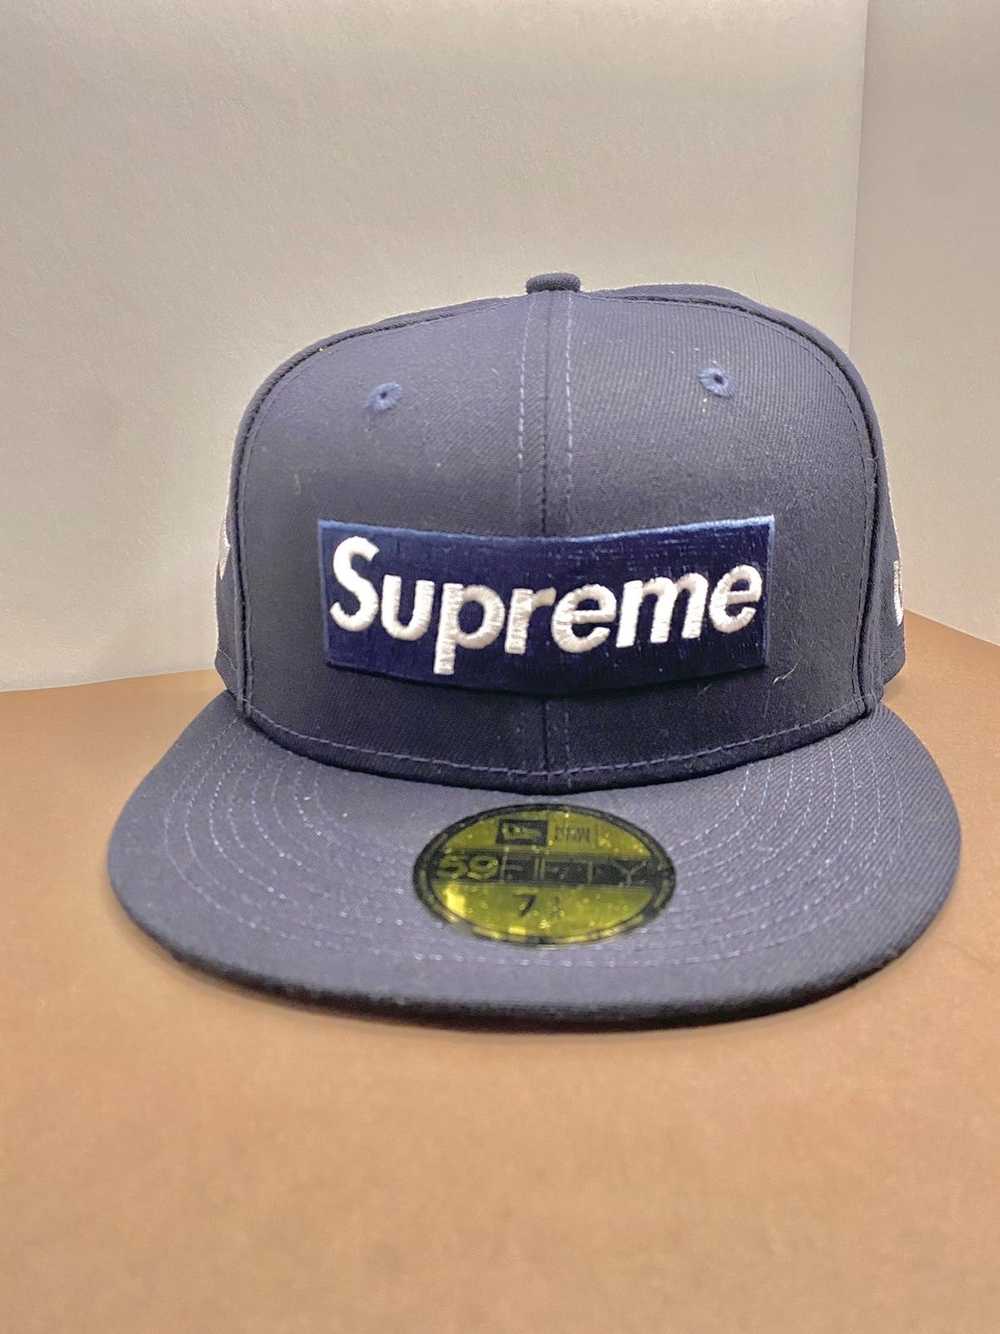 Supreme Supreme hat - image 3